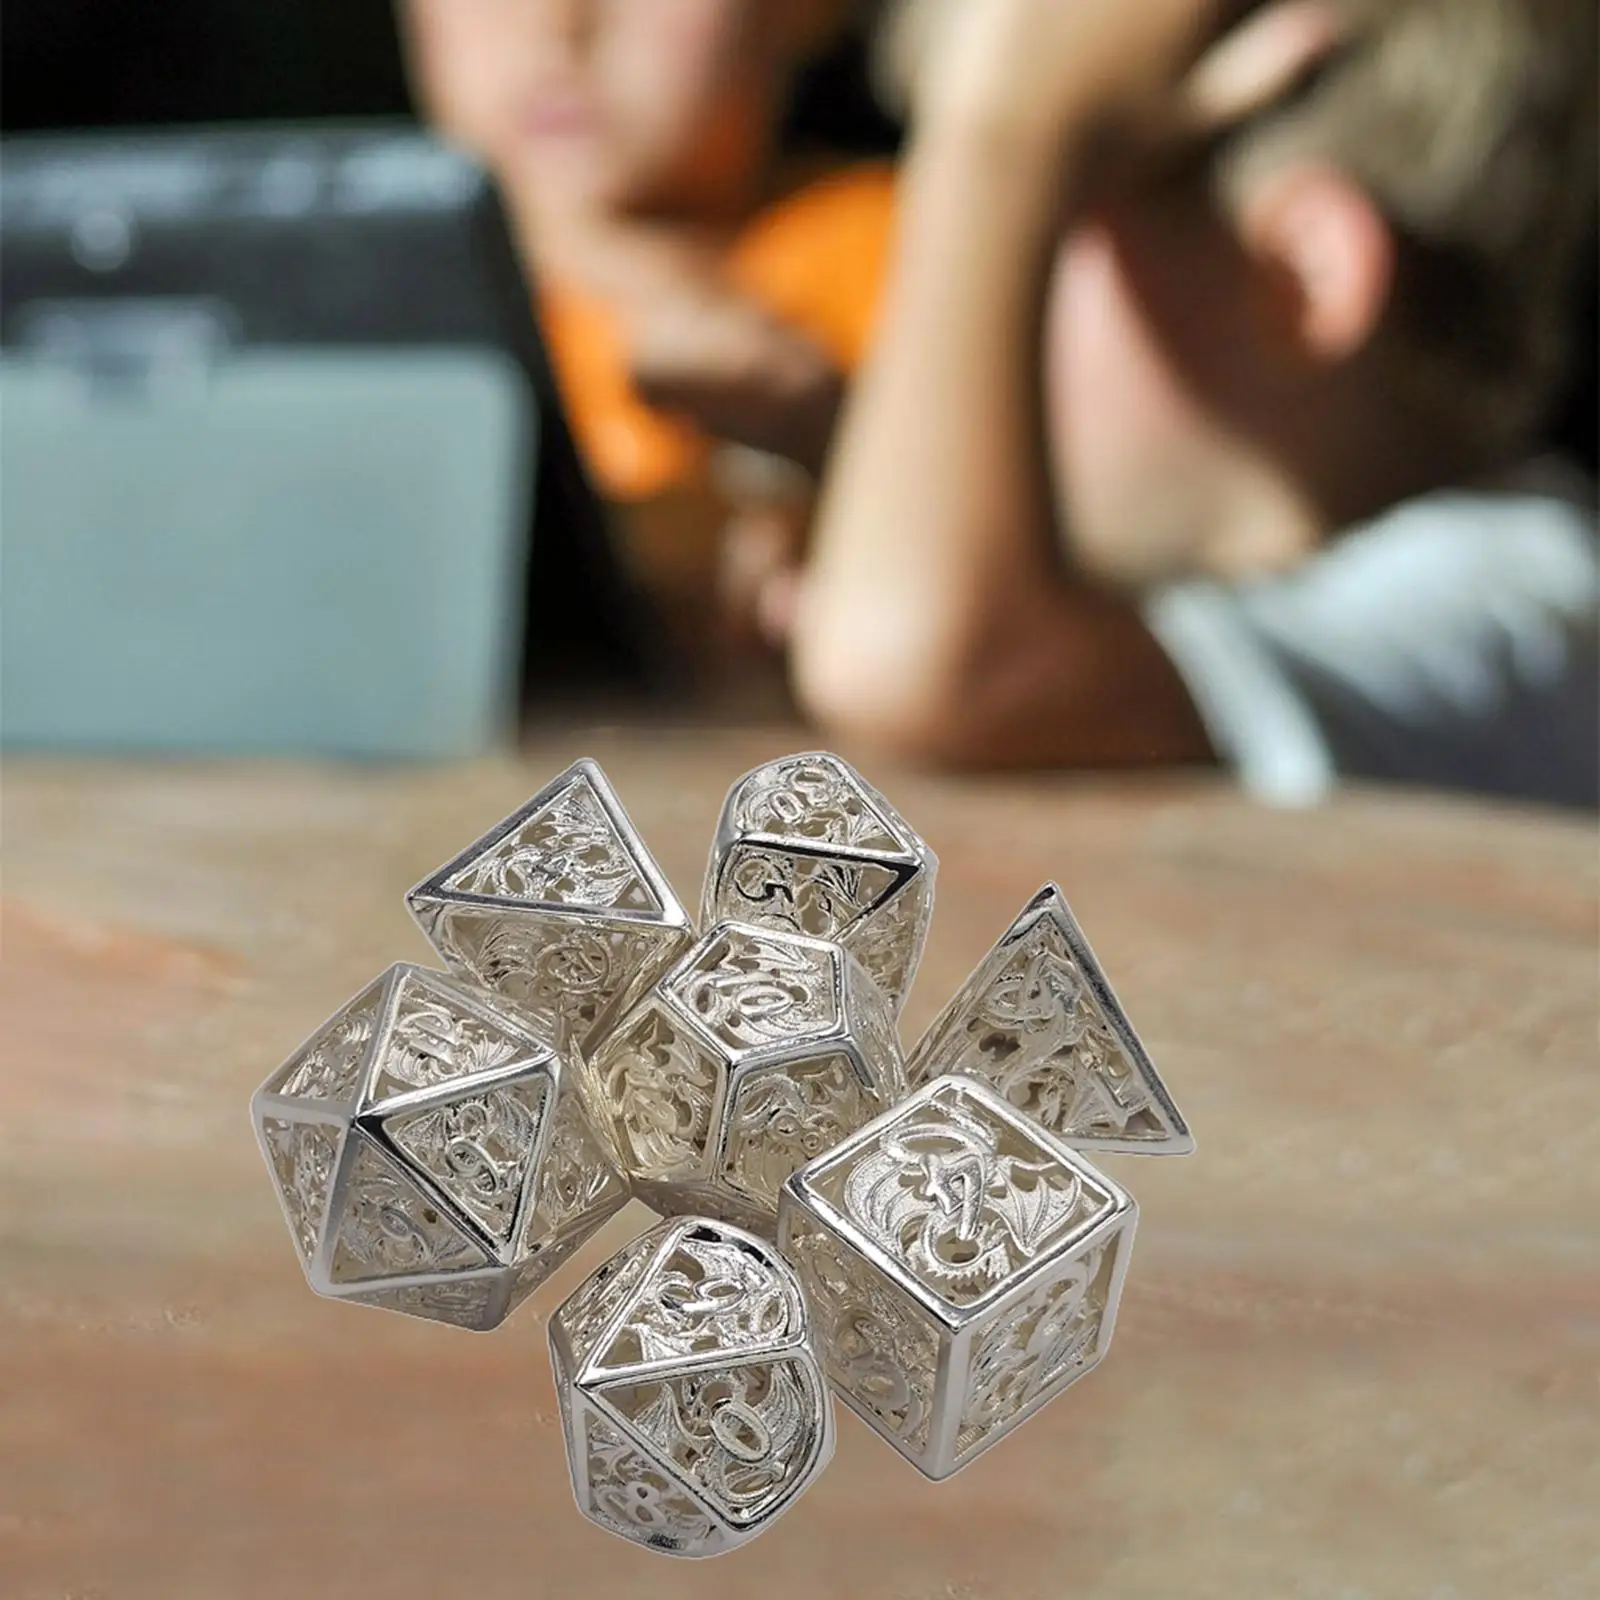 Set of 7 Polyhedron Dice Set D20 D12 D10 D8 D6 D4 for Board Game, Party Favors, Math Teaching,